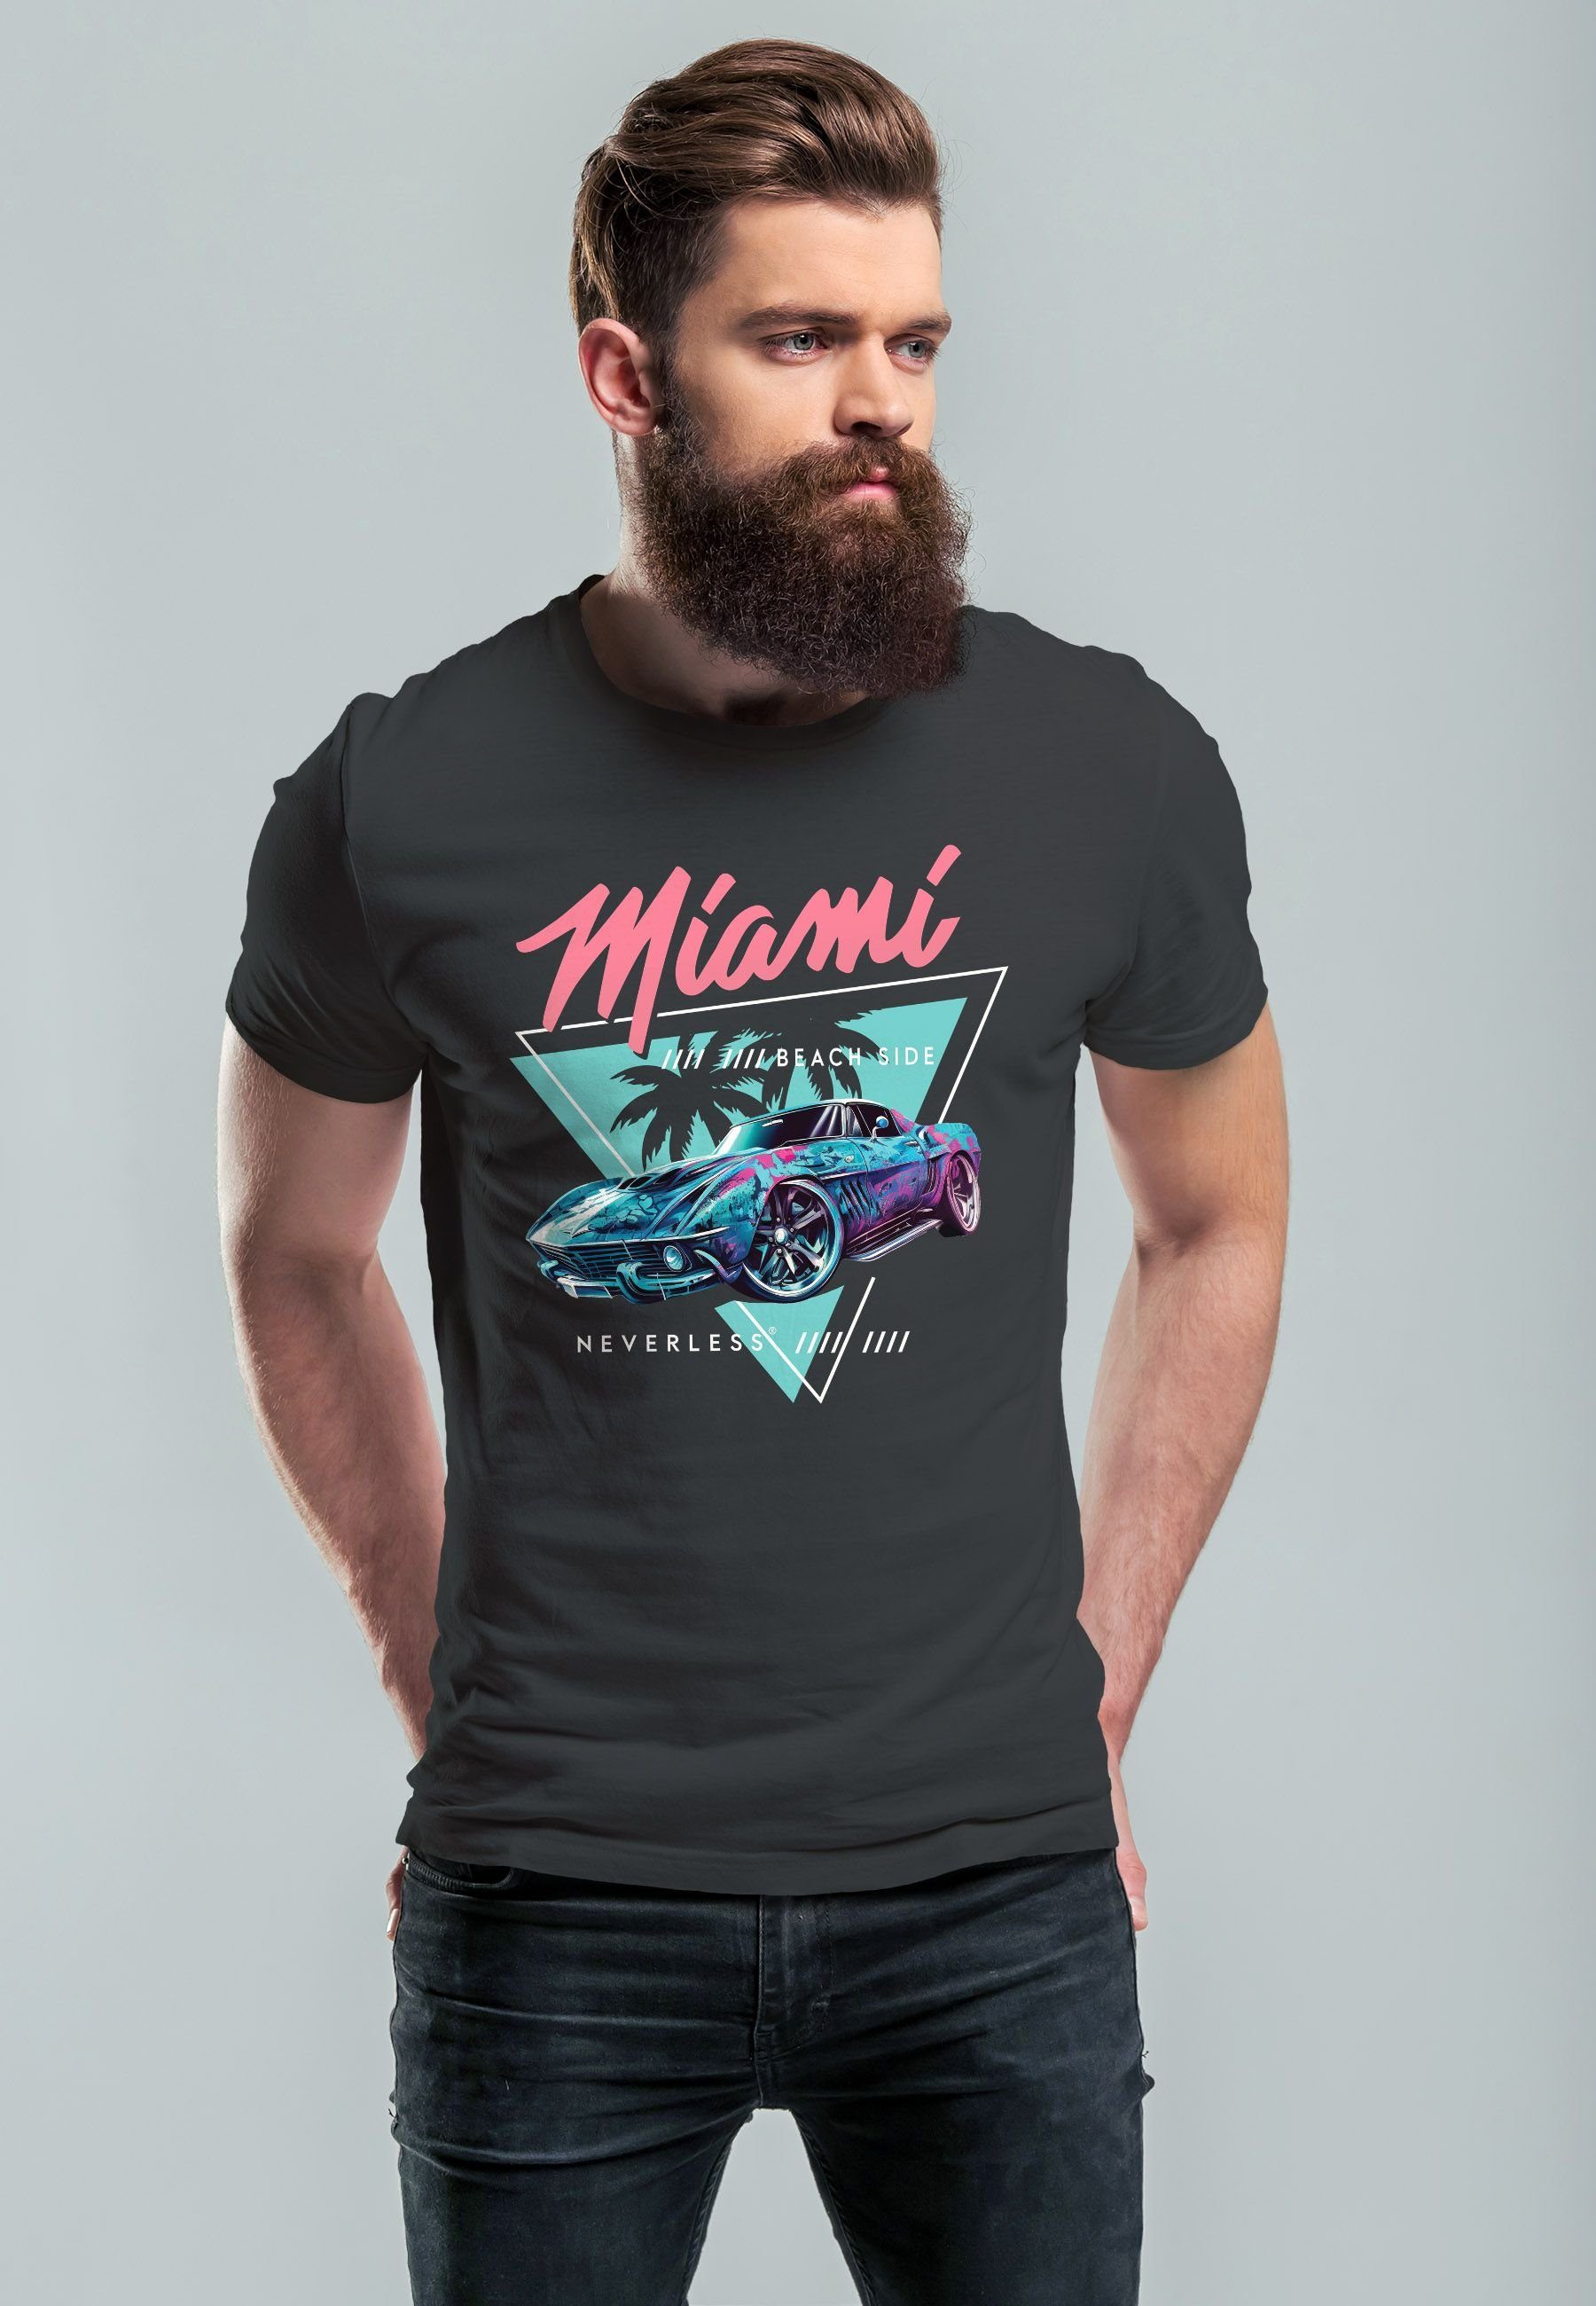 Neverless Print-Shirt Herren T-Shirt Bedruckt Surfing Motiv anthrazit USA Automobil Beach Print mit Miami Retro